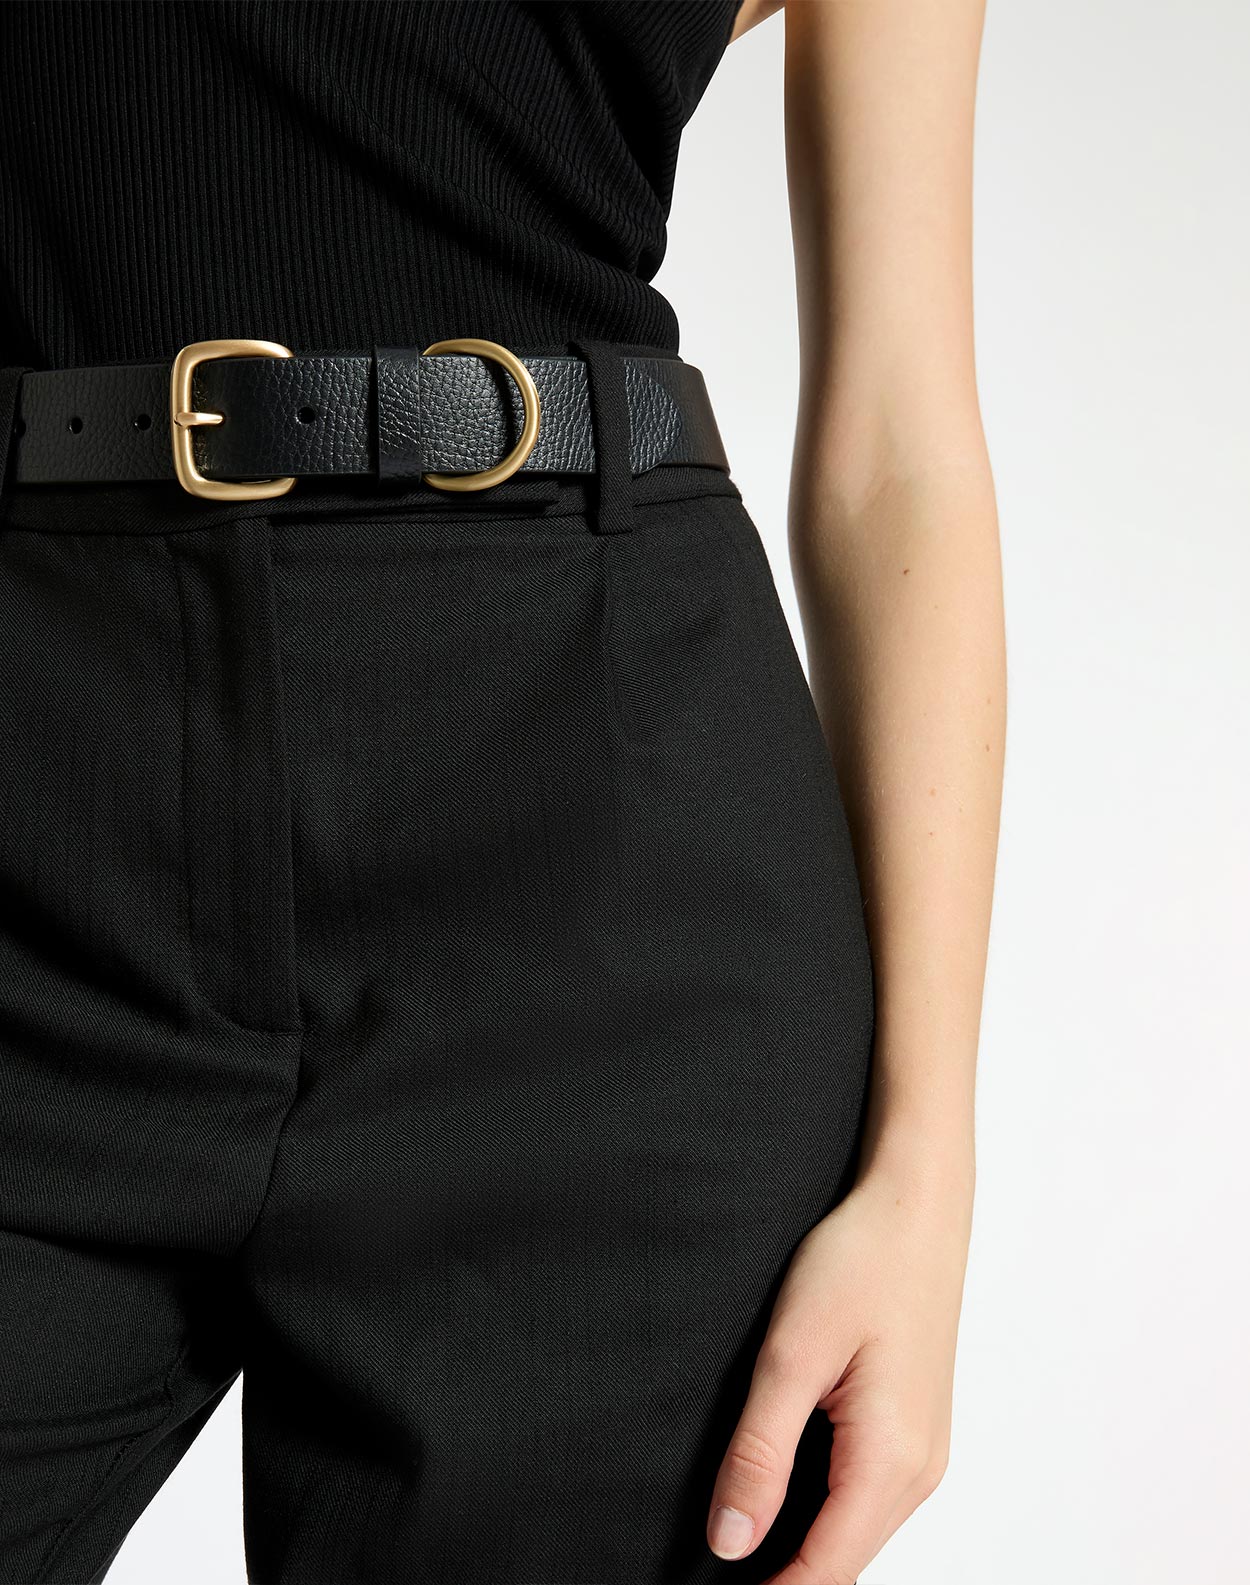 Status Anxiety Disarm Women's Leather Belt